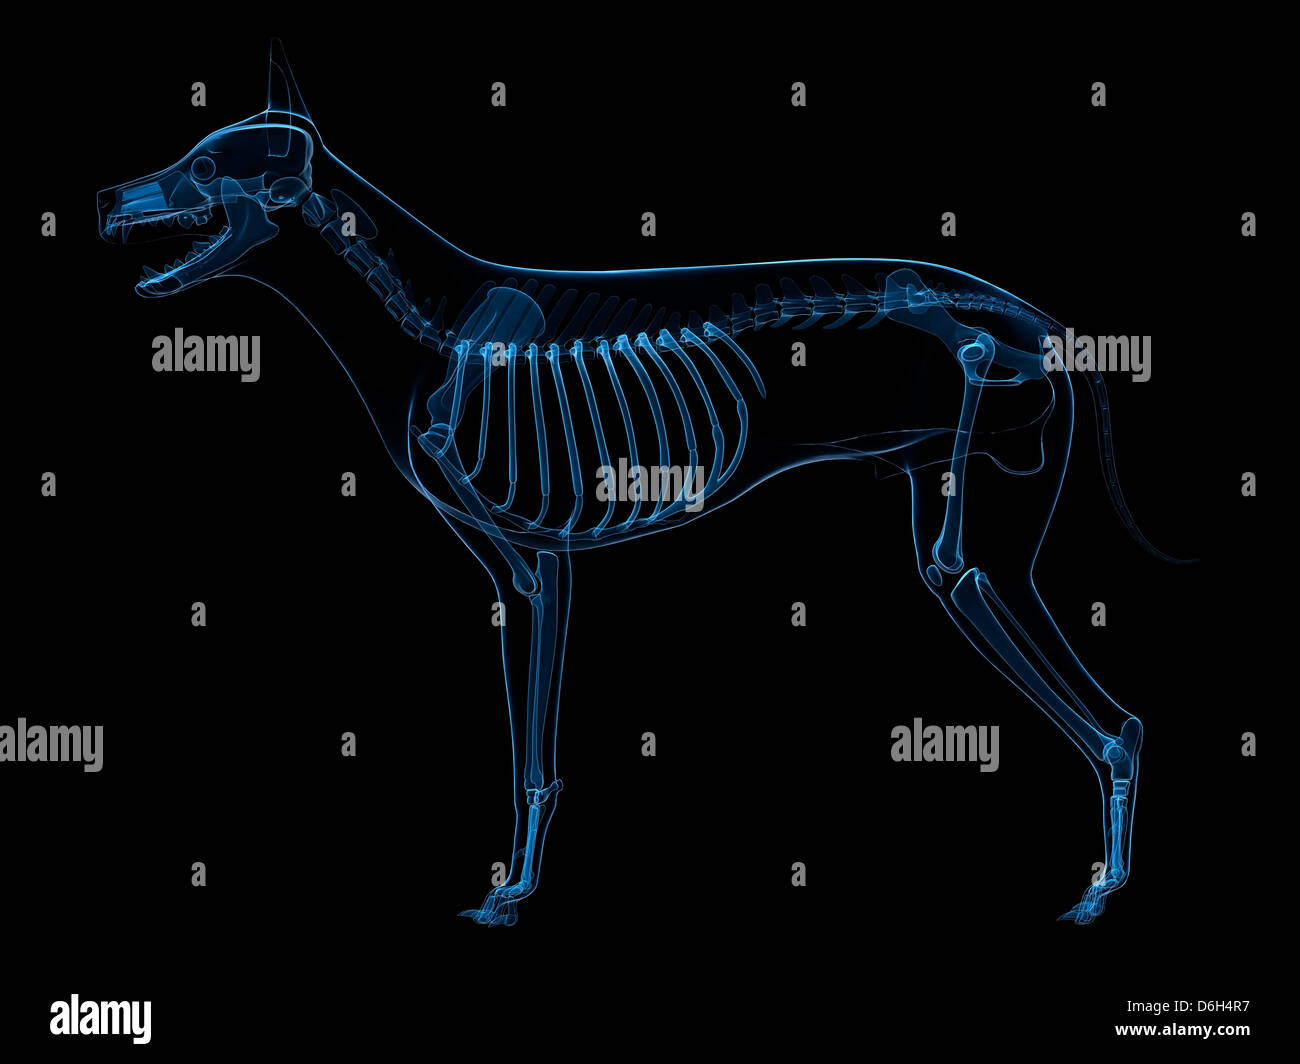 Howling Bonez Animated Dog Skeleton Prop